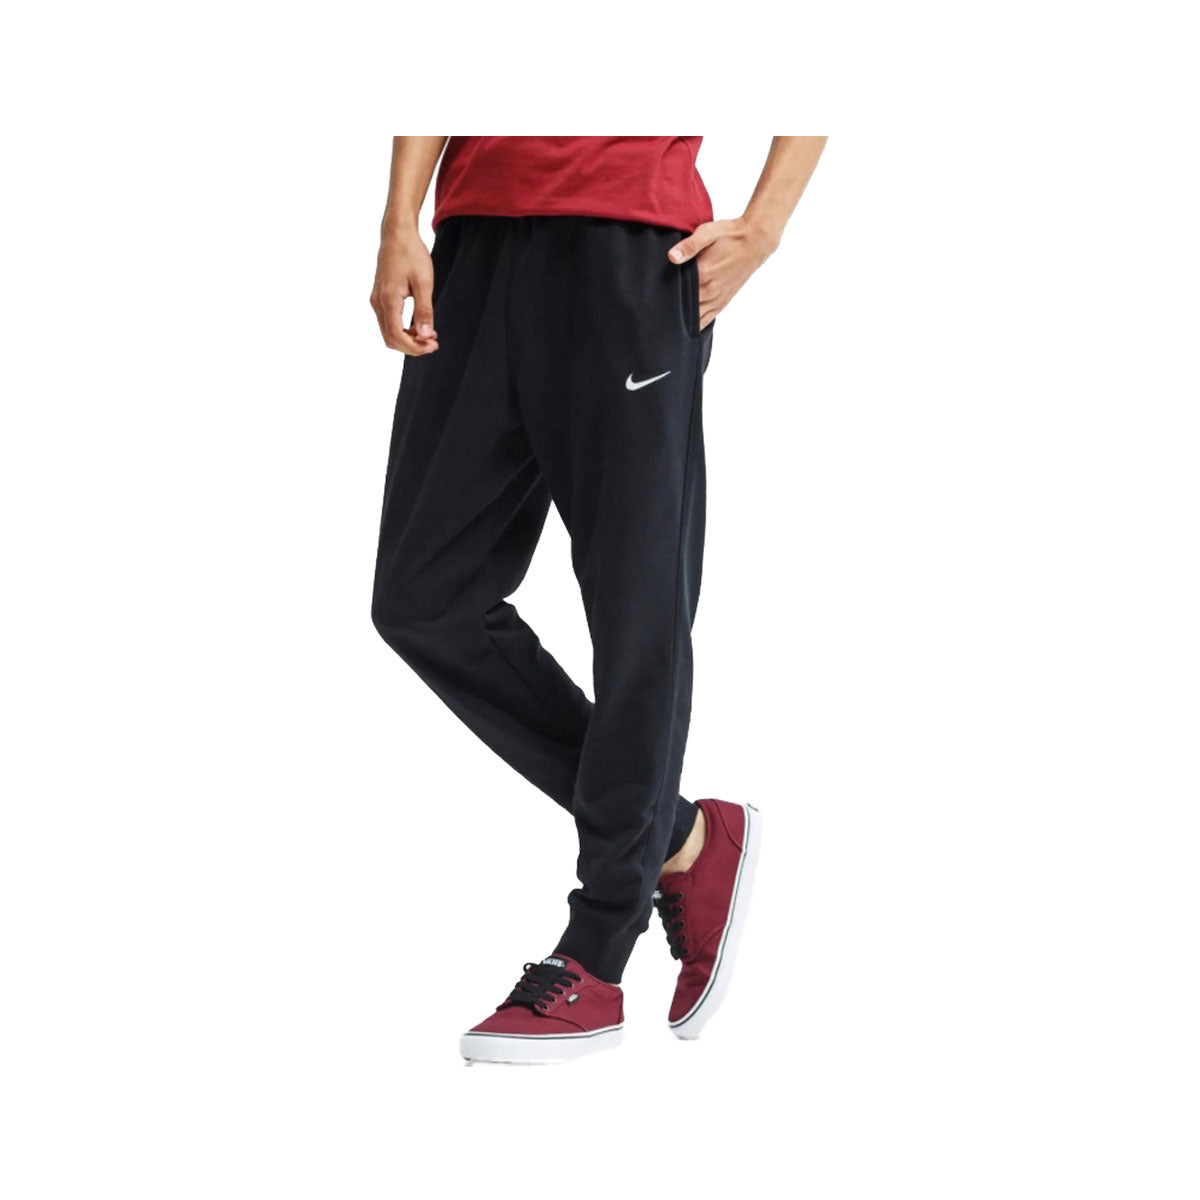 Nike Men's Flex Training Trousers